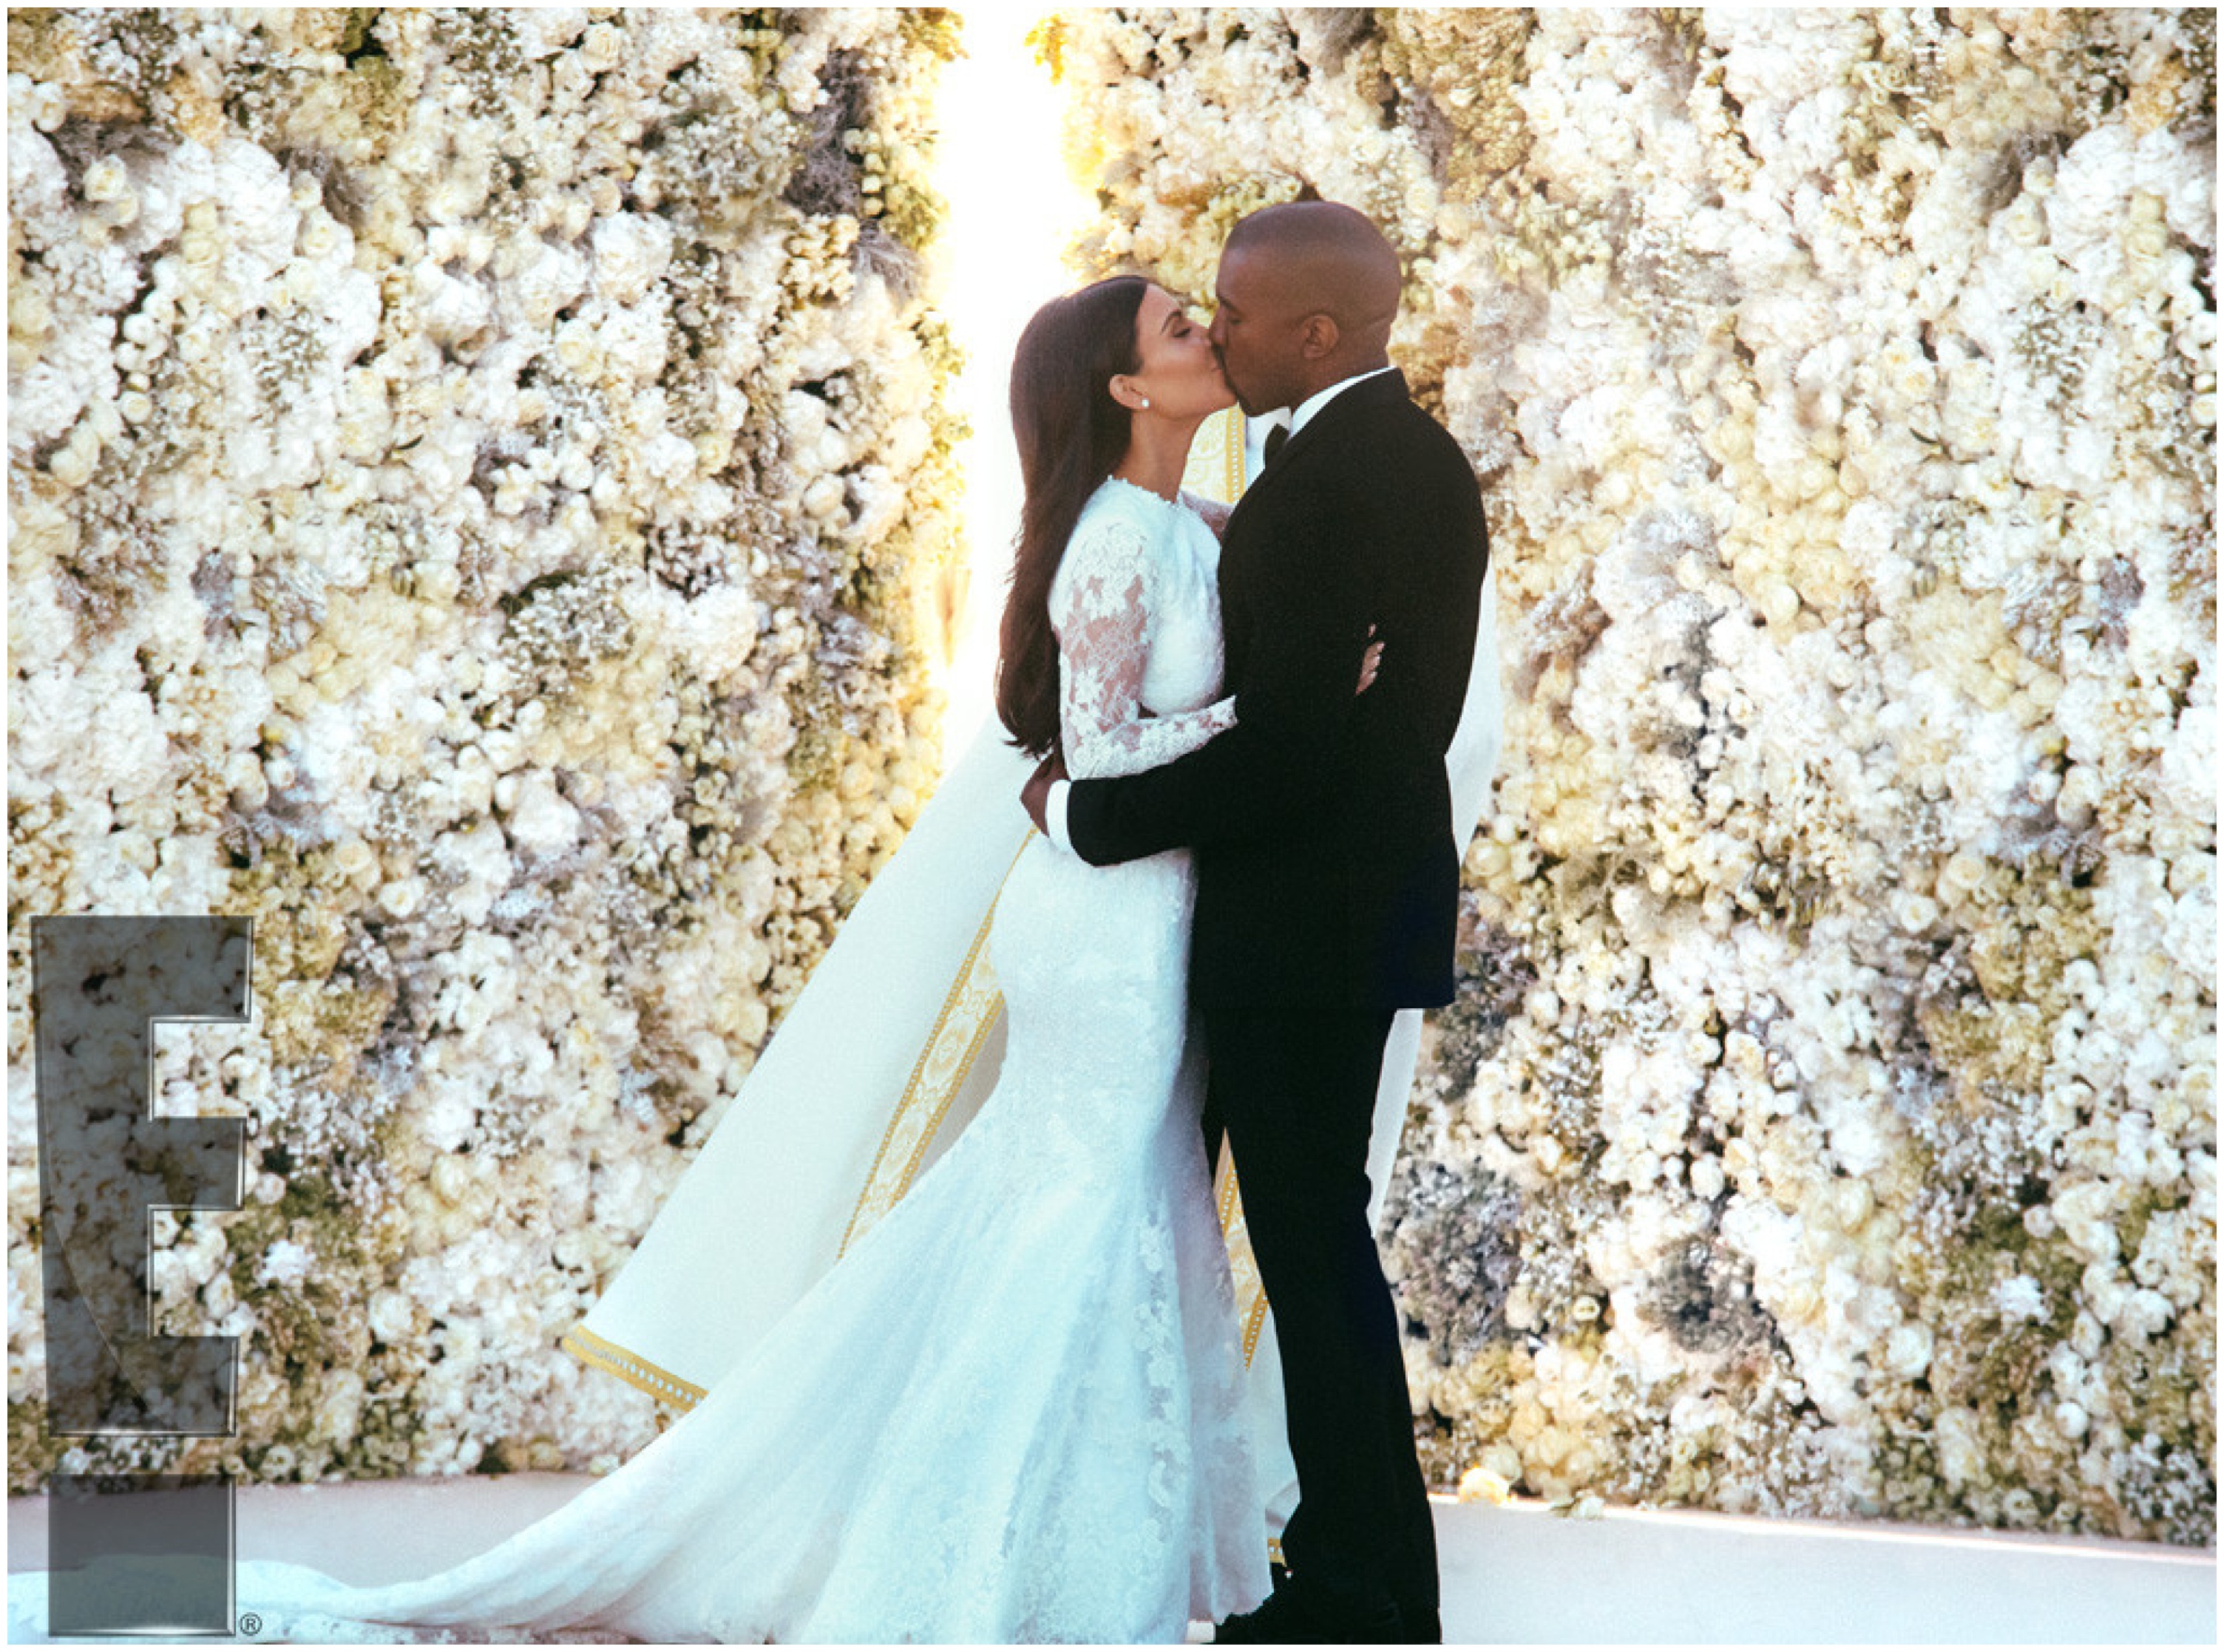 Wedding News: Kim Kardashian's wedding dresses